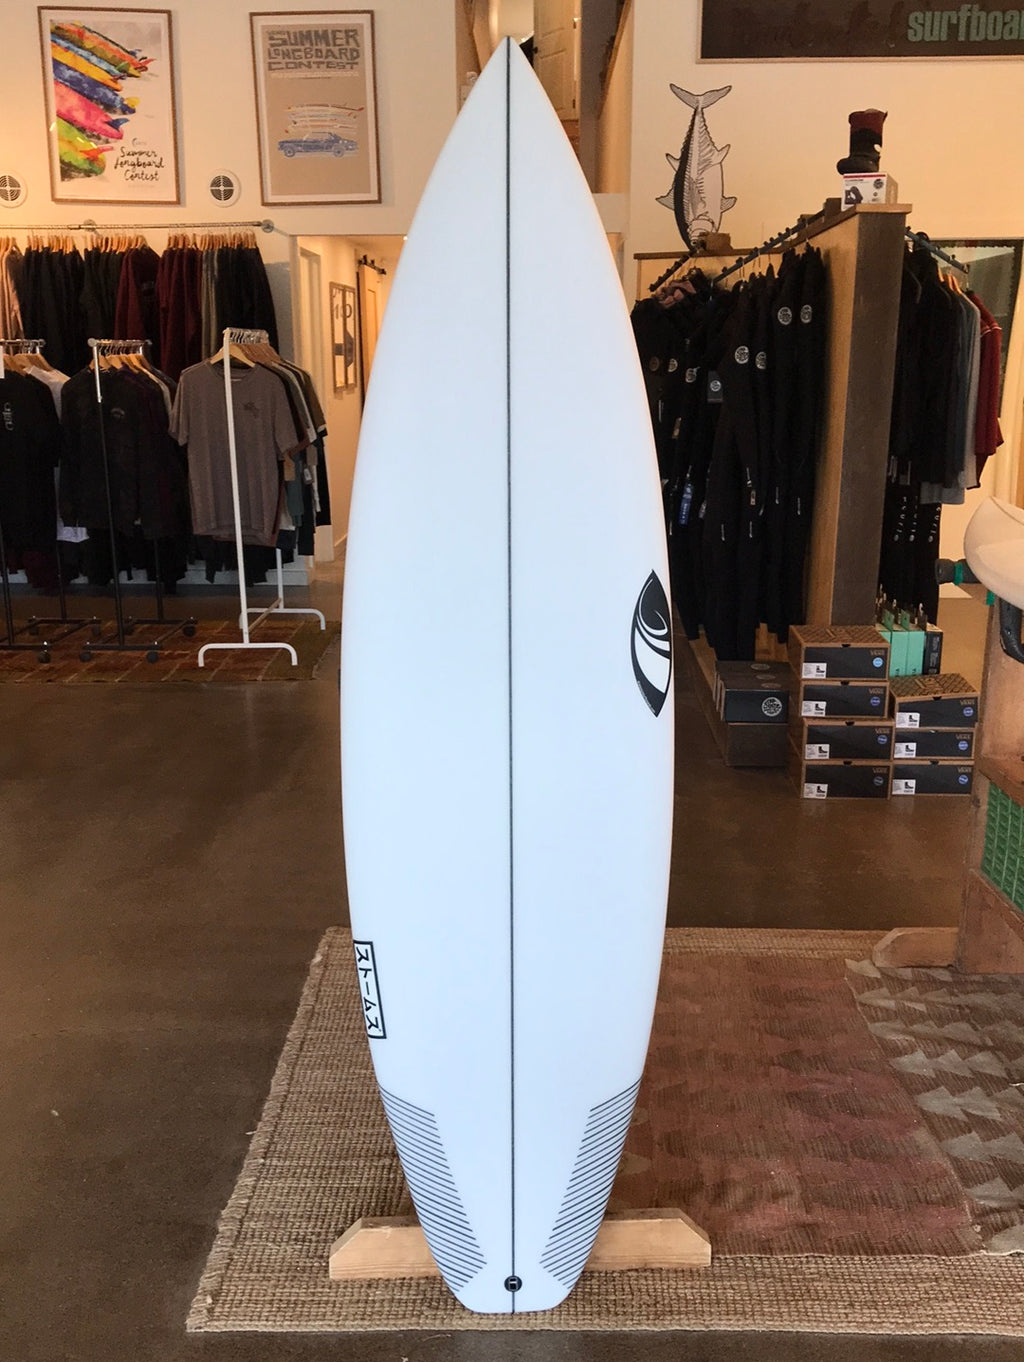 Sharp Eye Surfboards - Storms 5'11" x 19.25" x 2.5"